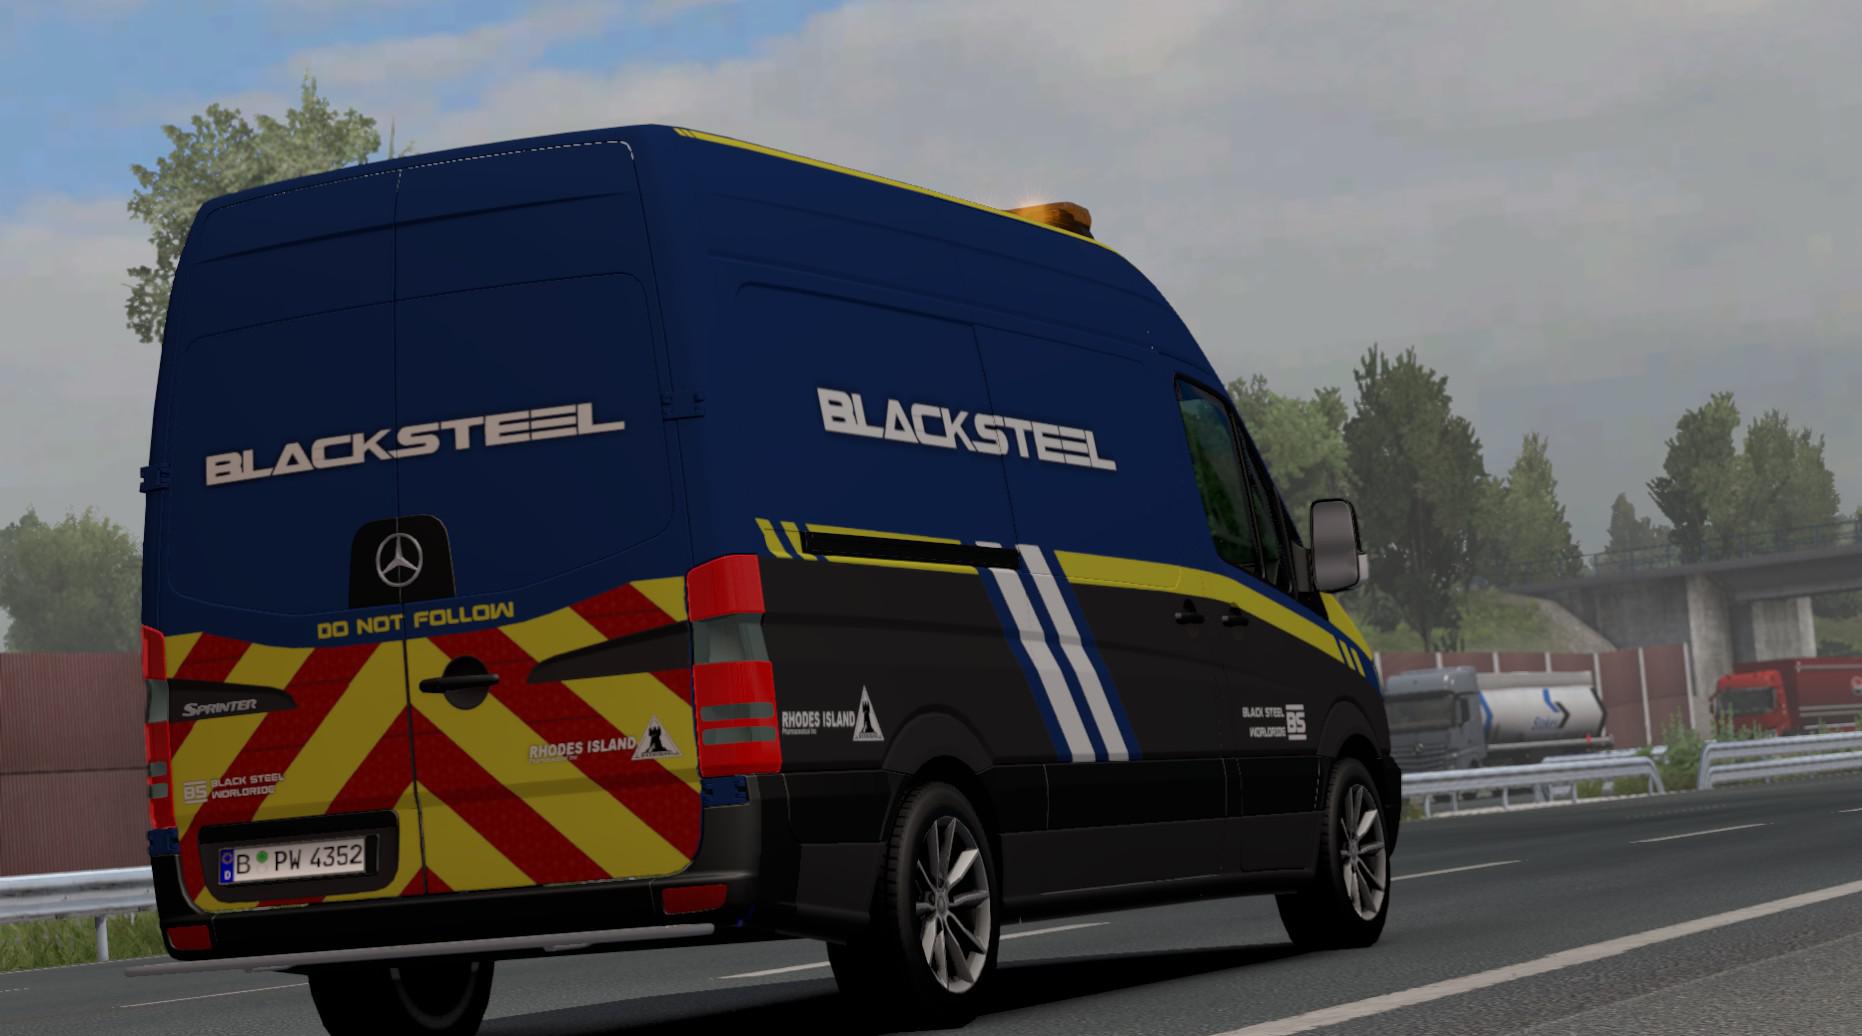 Ets2 Blacksteel Worldwide Escort Vehicle V1 0 1 39 X Euro Truck Simulator 2 Mods Club